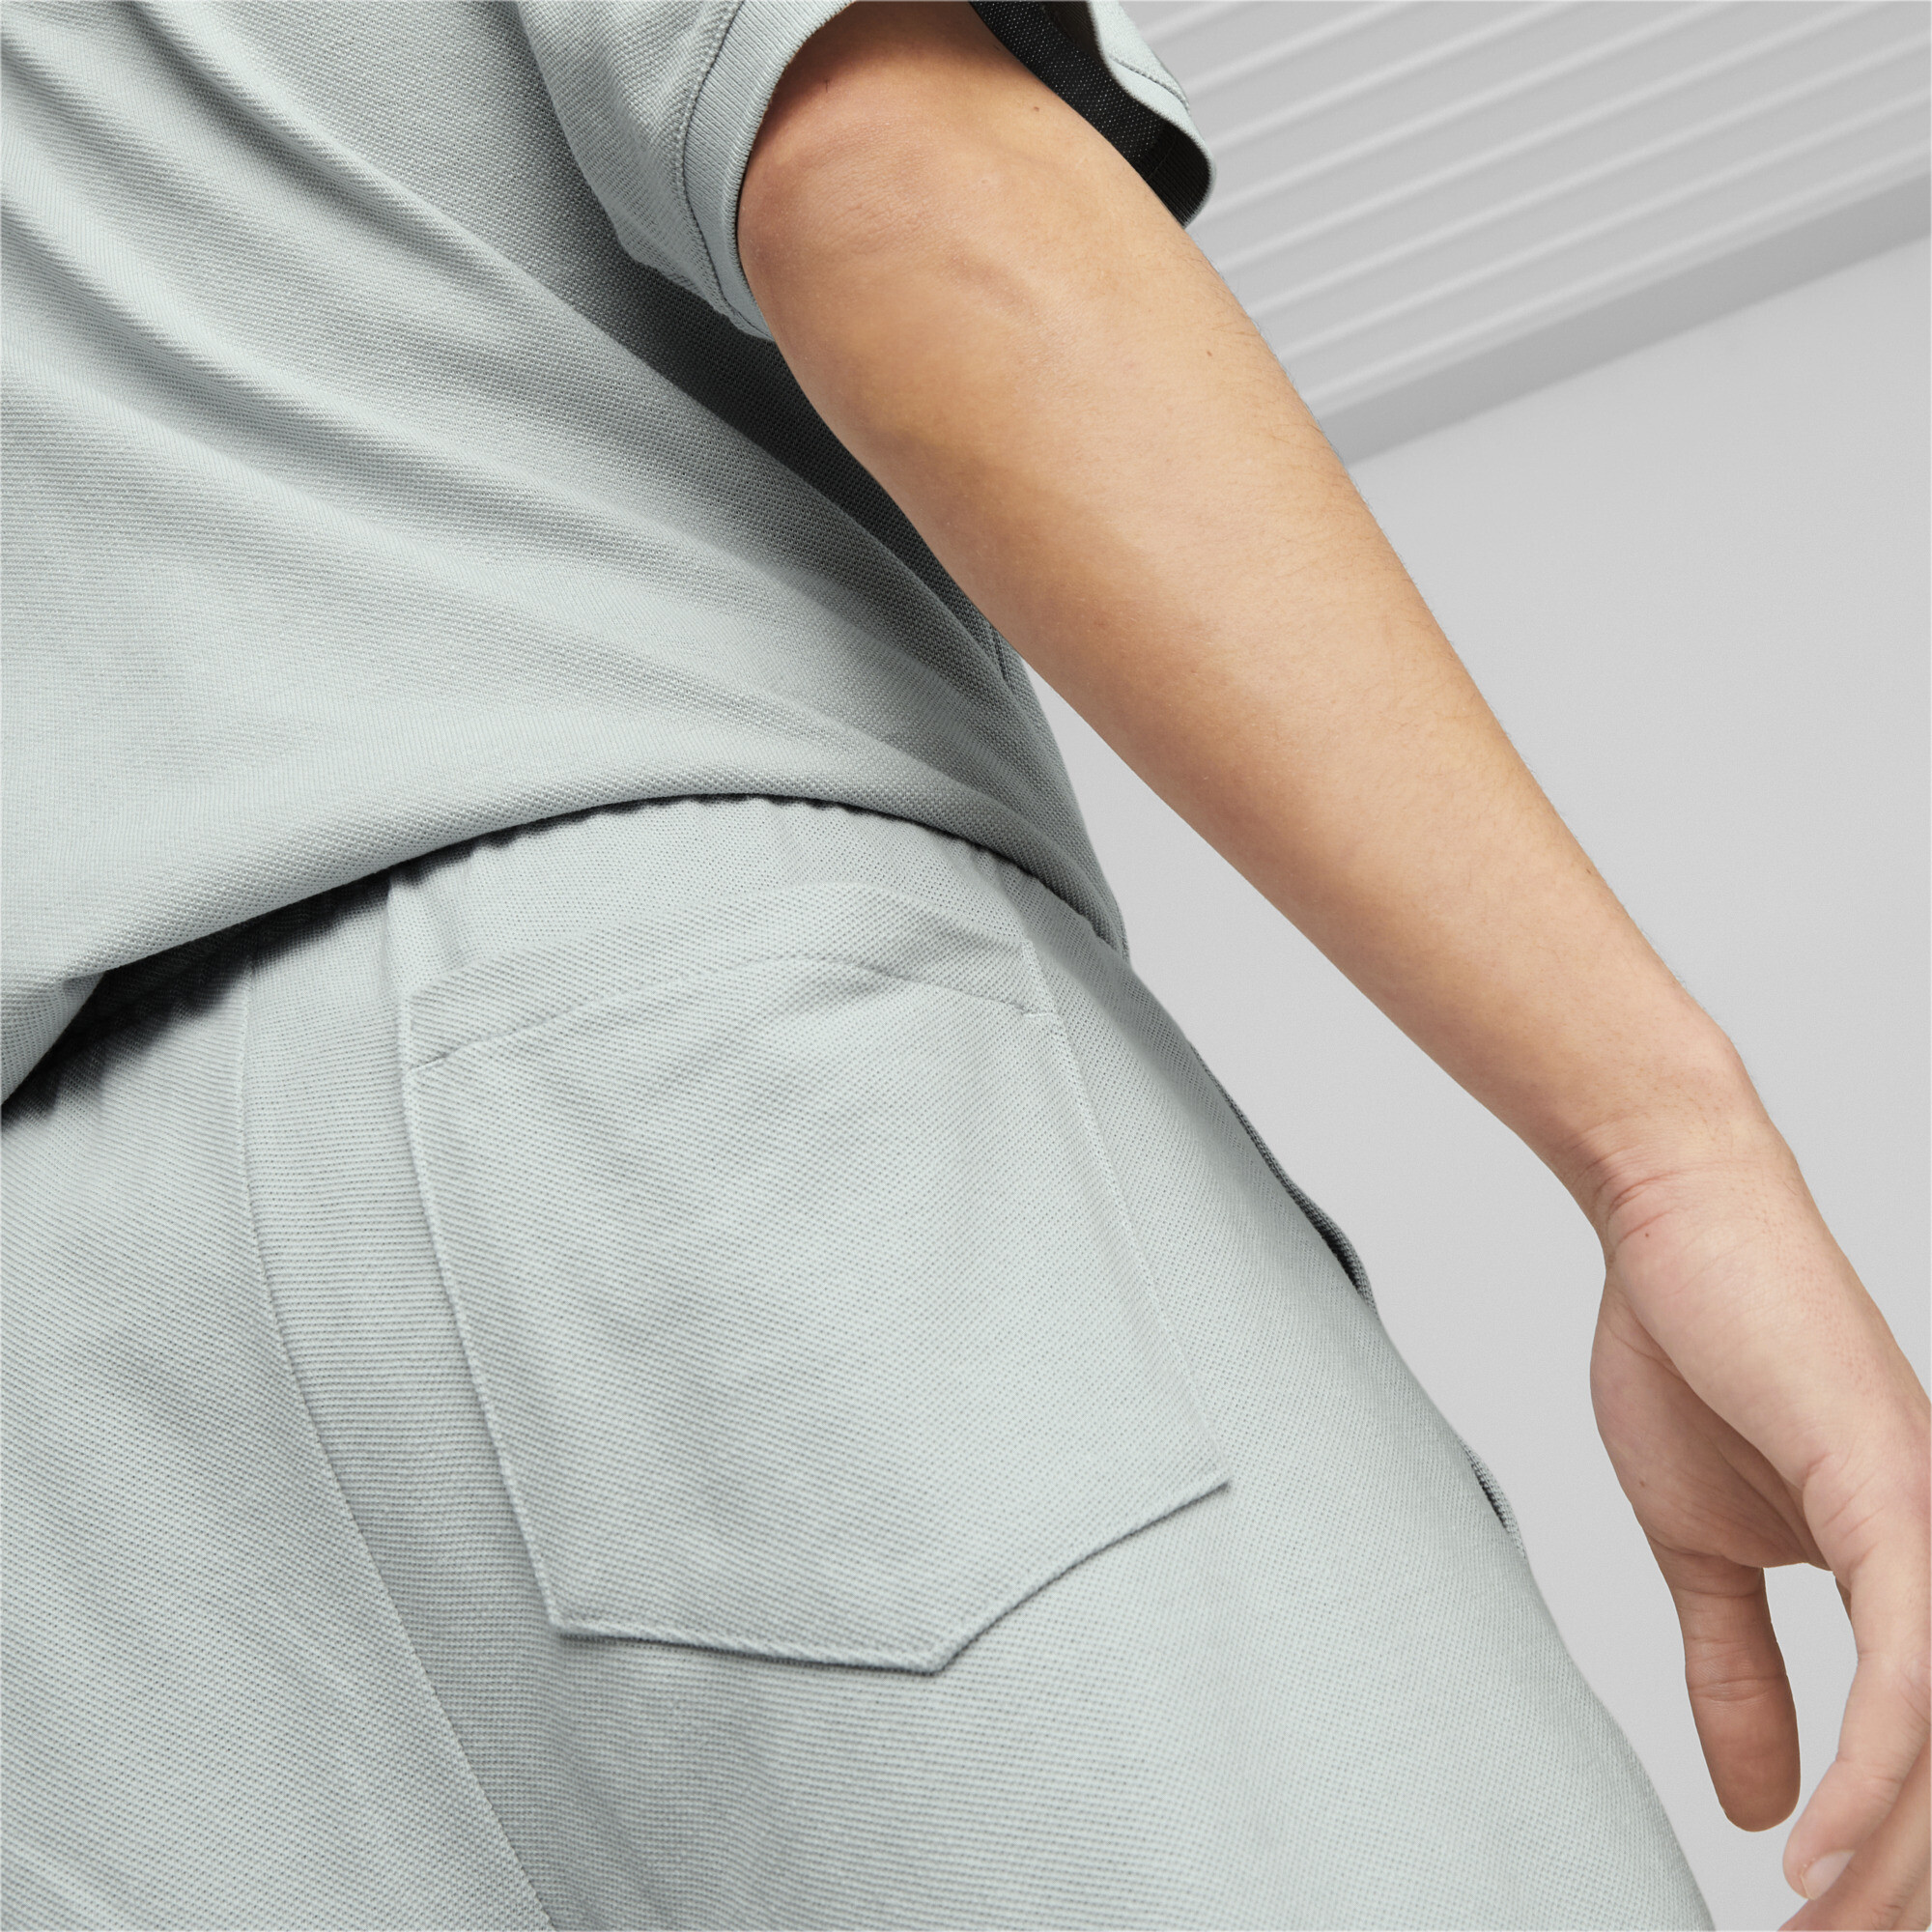 Men's PUMA Classics Pique 8 Shorts Men In Gray, Size Large